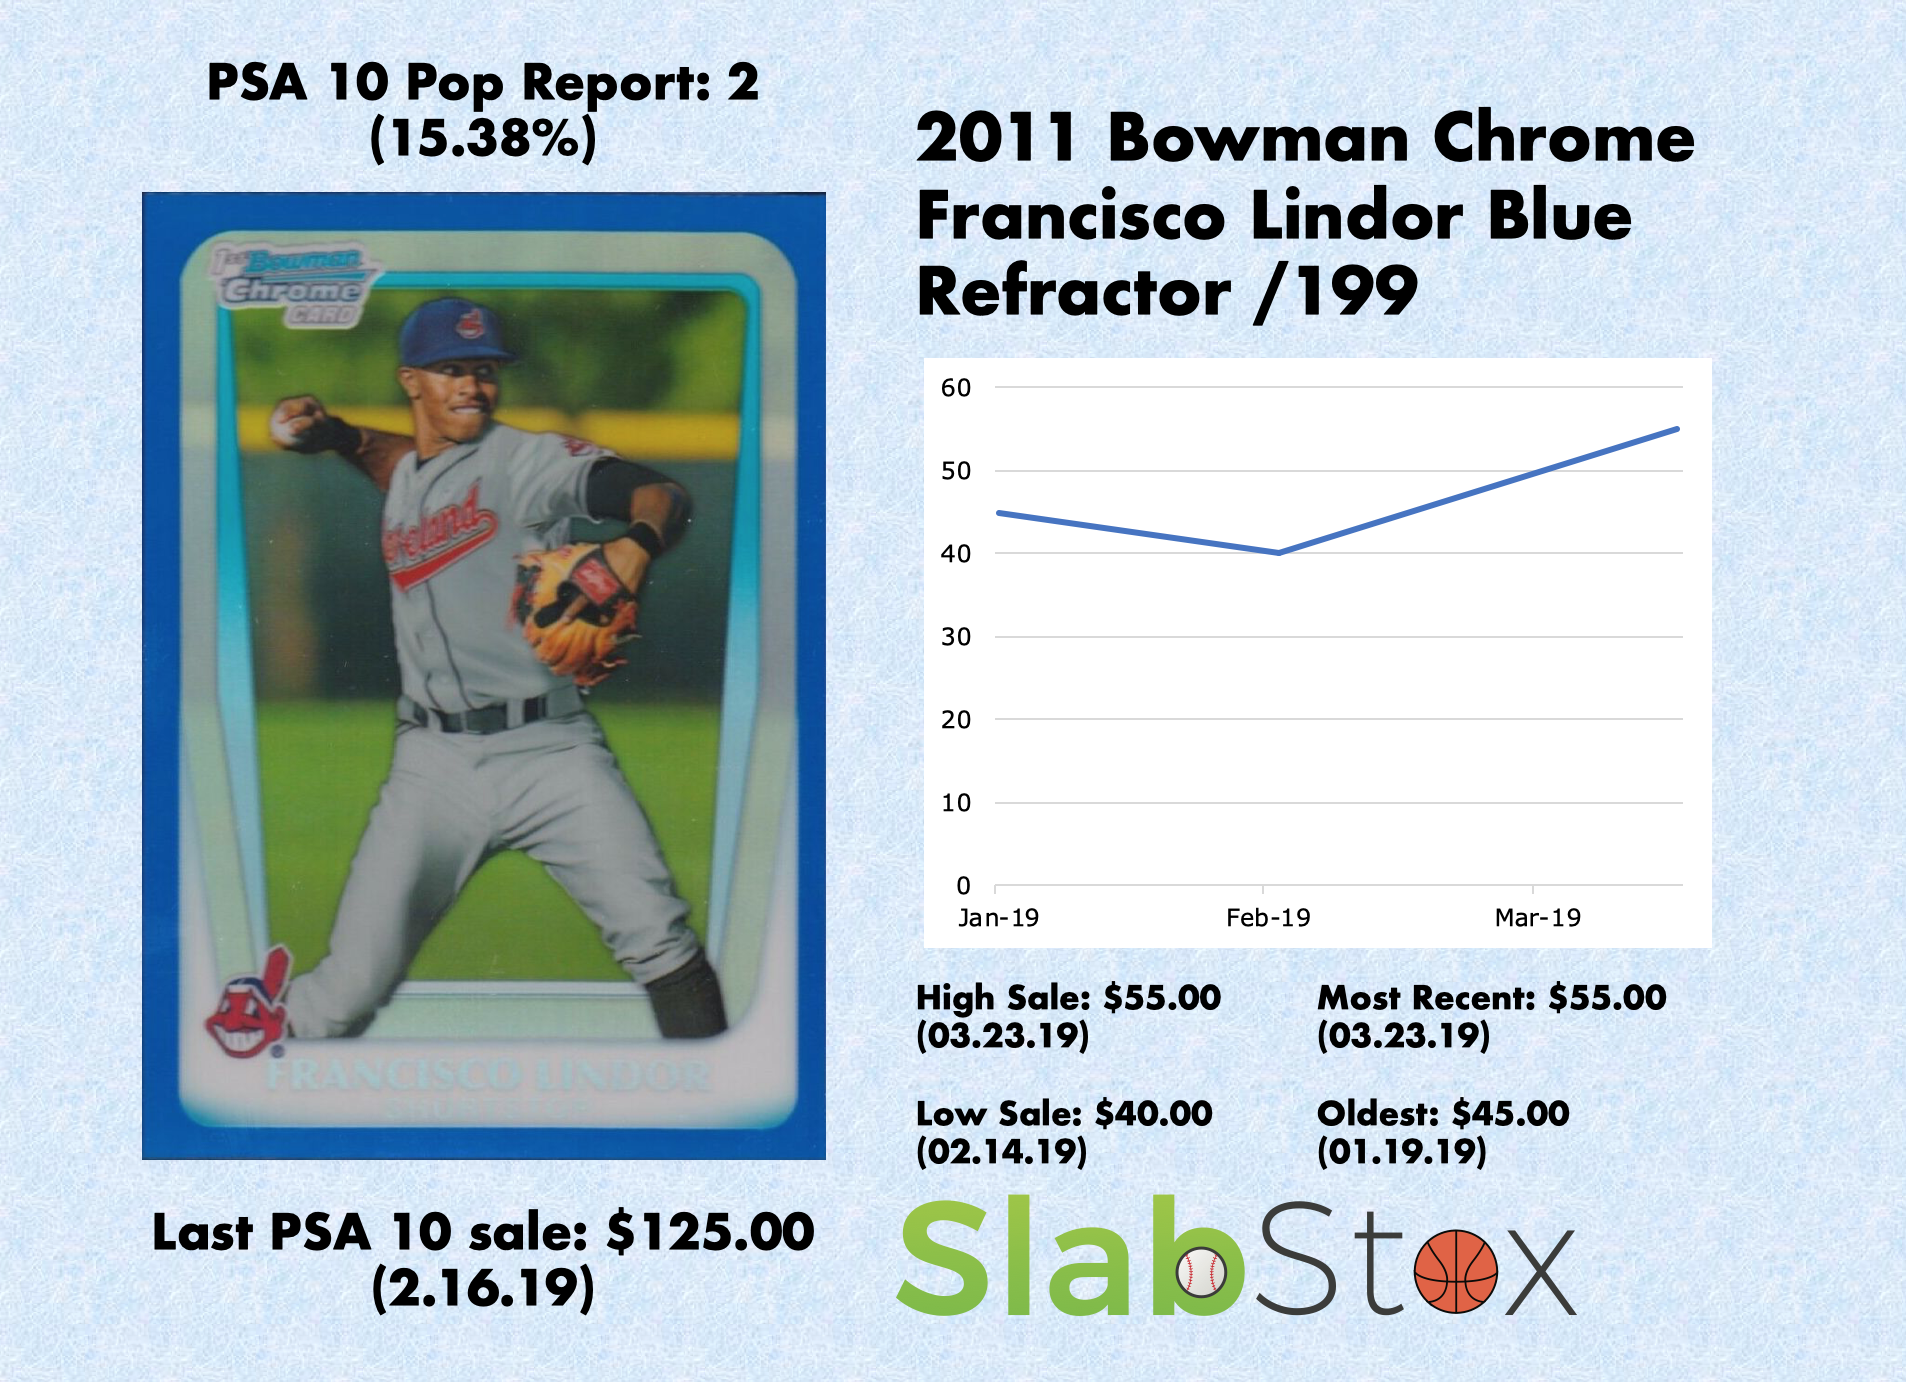 SlabStox infographic for 2011 Bowman Chrome Francisco Lindor Blue Refractor /199